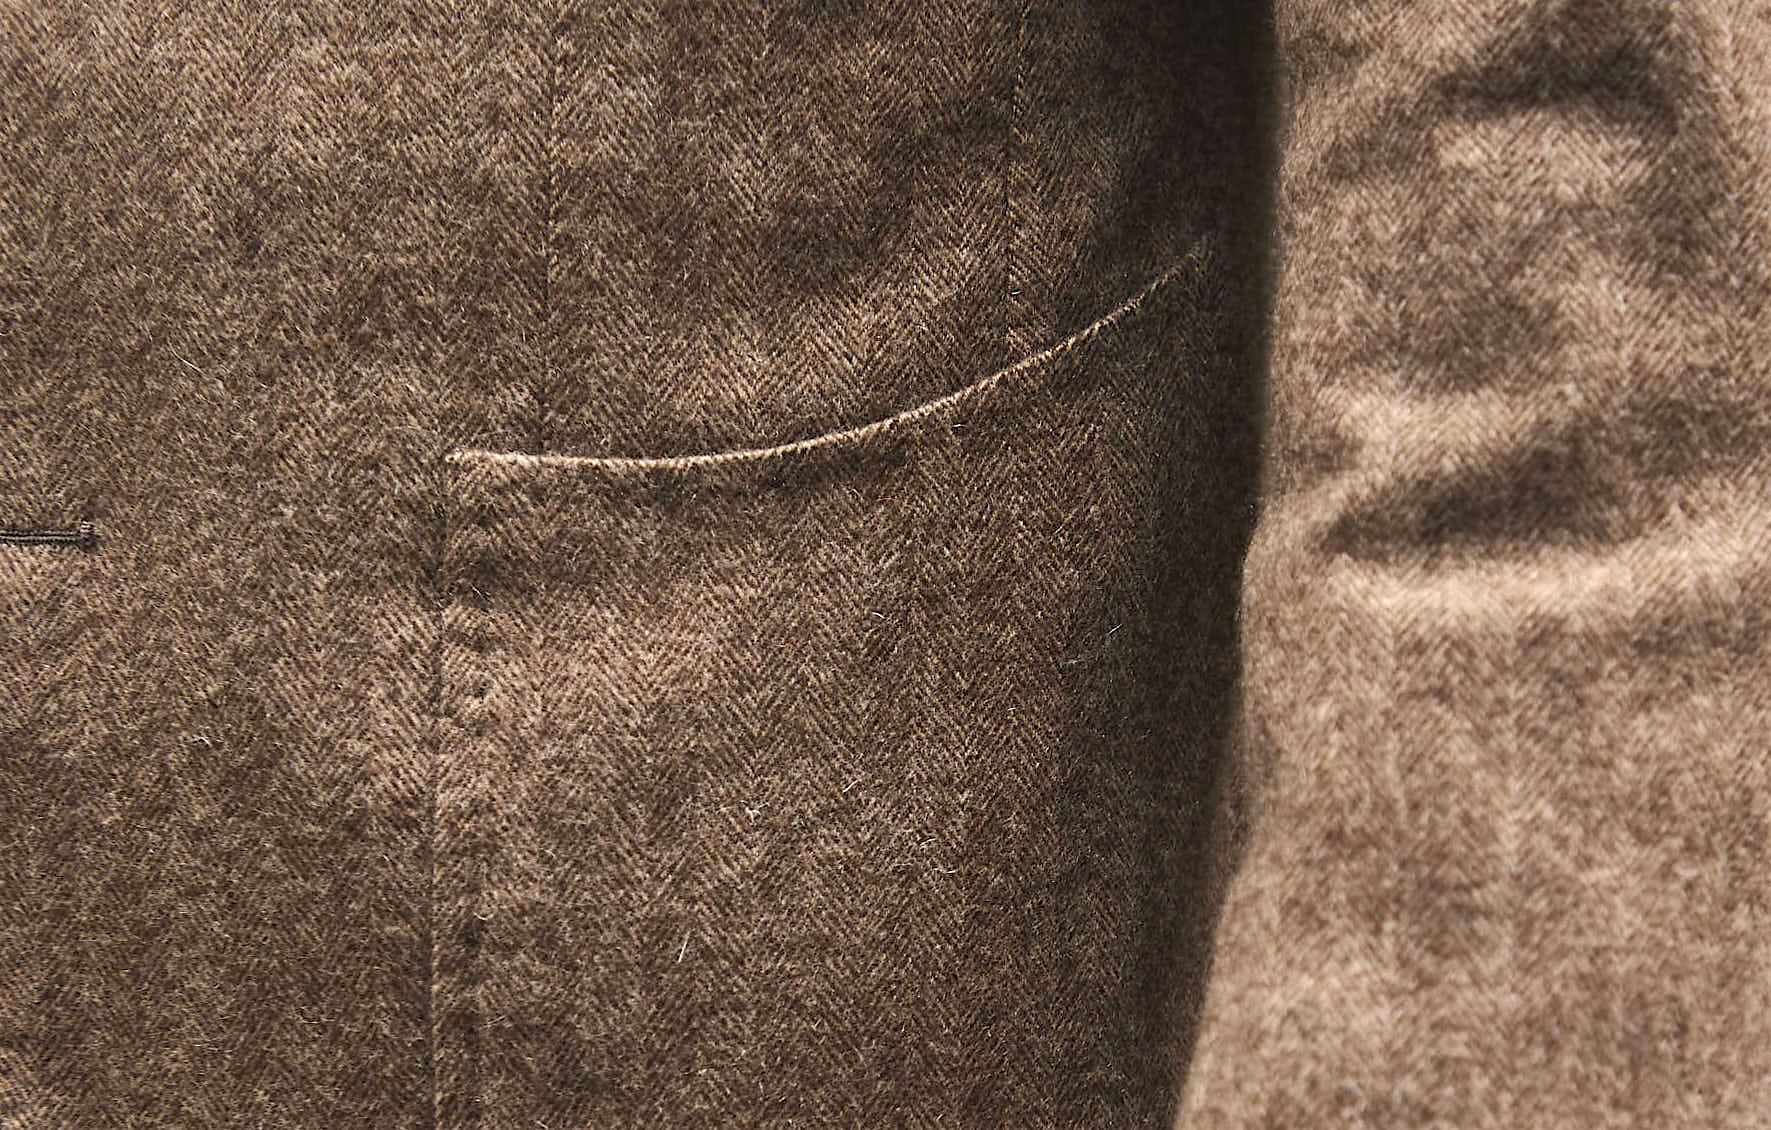 Jacket and jeans: vintage cashmere from Eduardo de Simone – Permanent Style